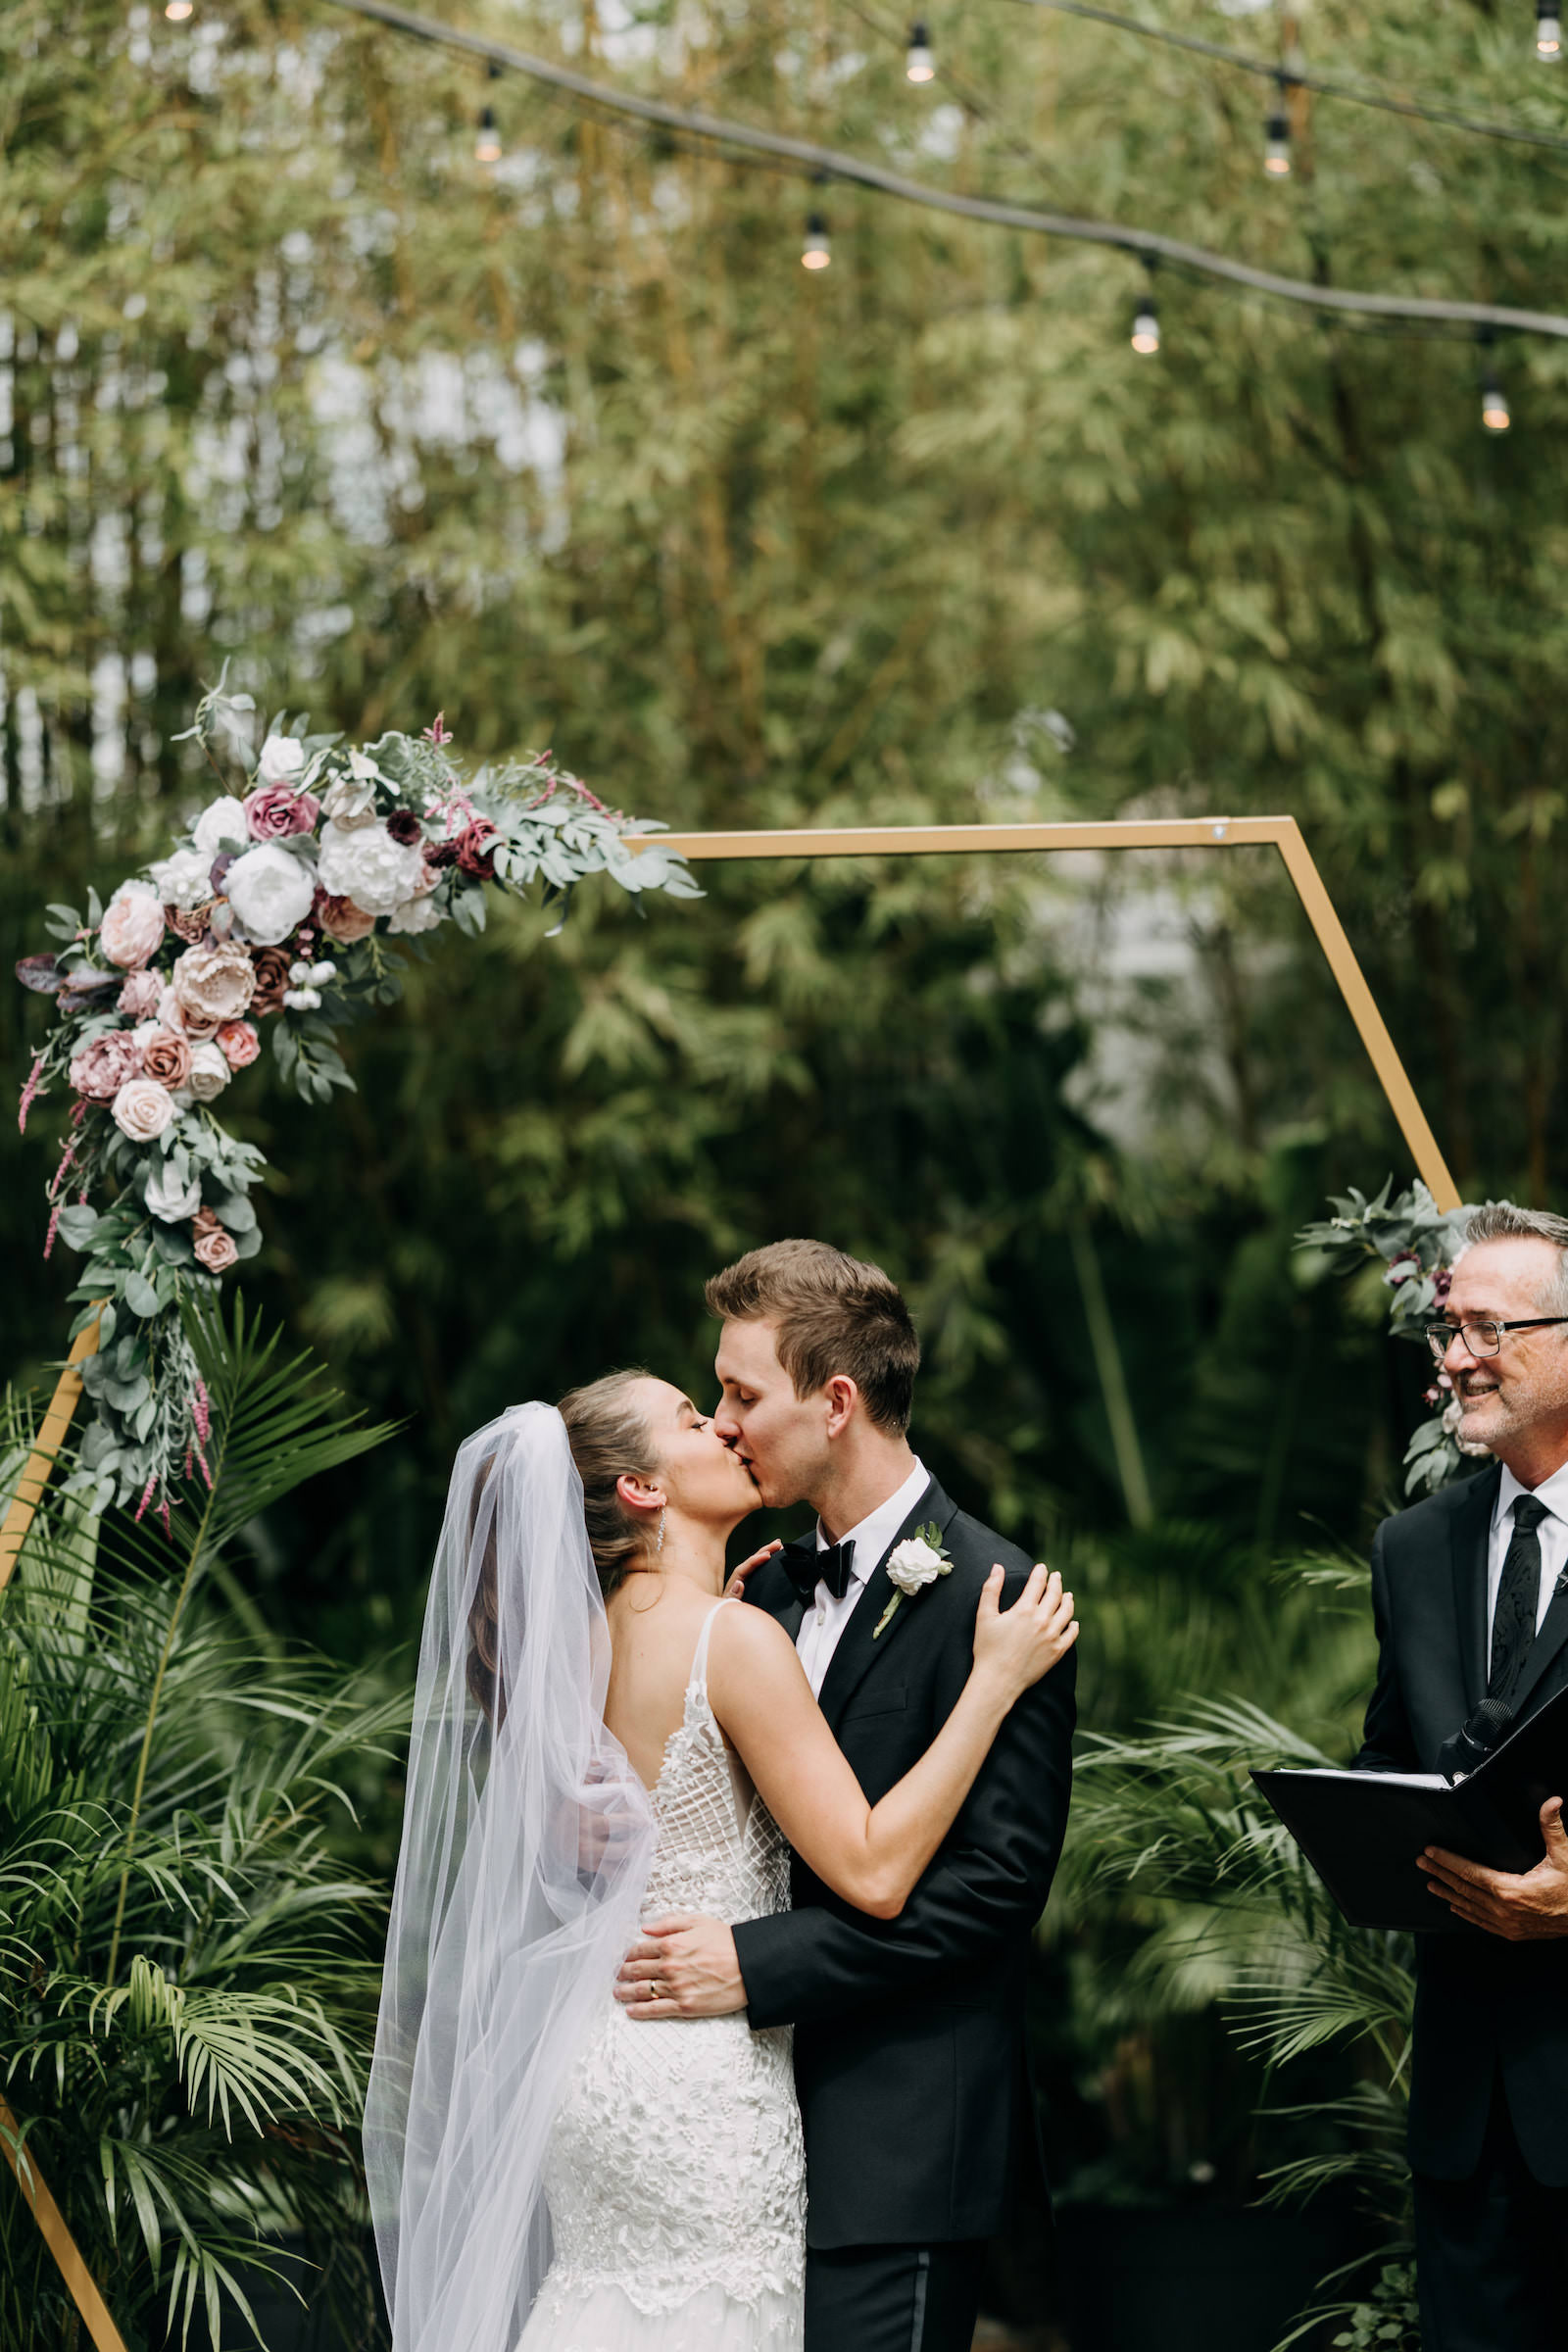 Bride and Groom First Kiss Portrait | Tampa Florida Wedding Photographer Amber McWhorter Photography | Florida Wedding Venue Nova 535